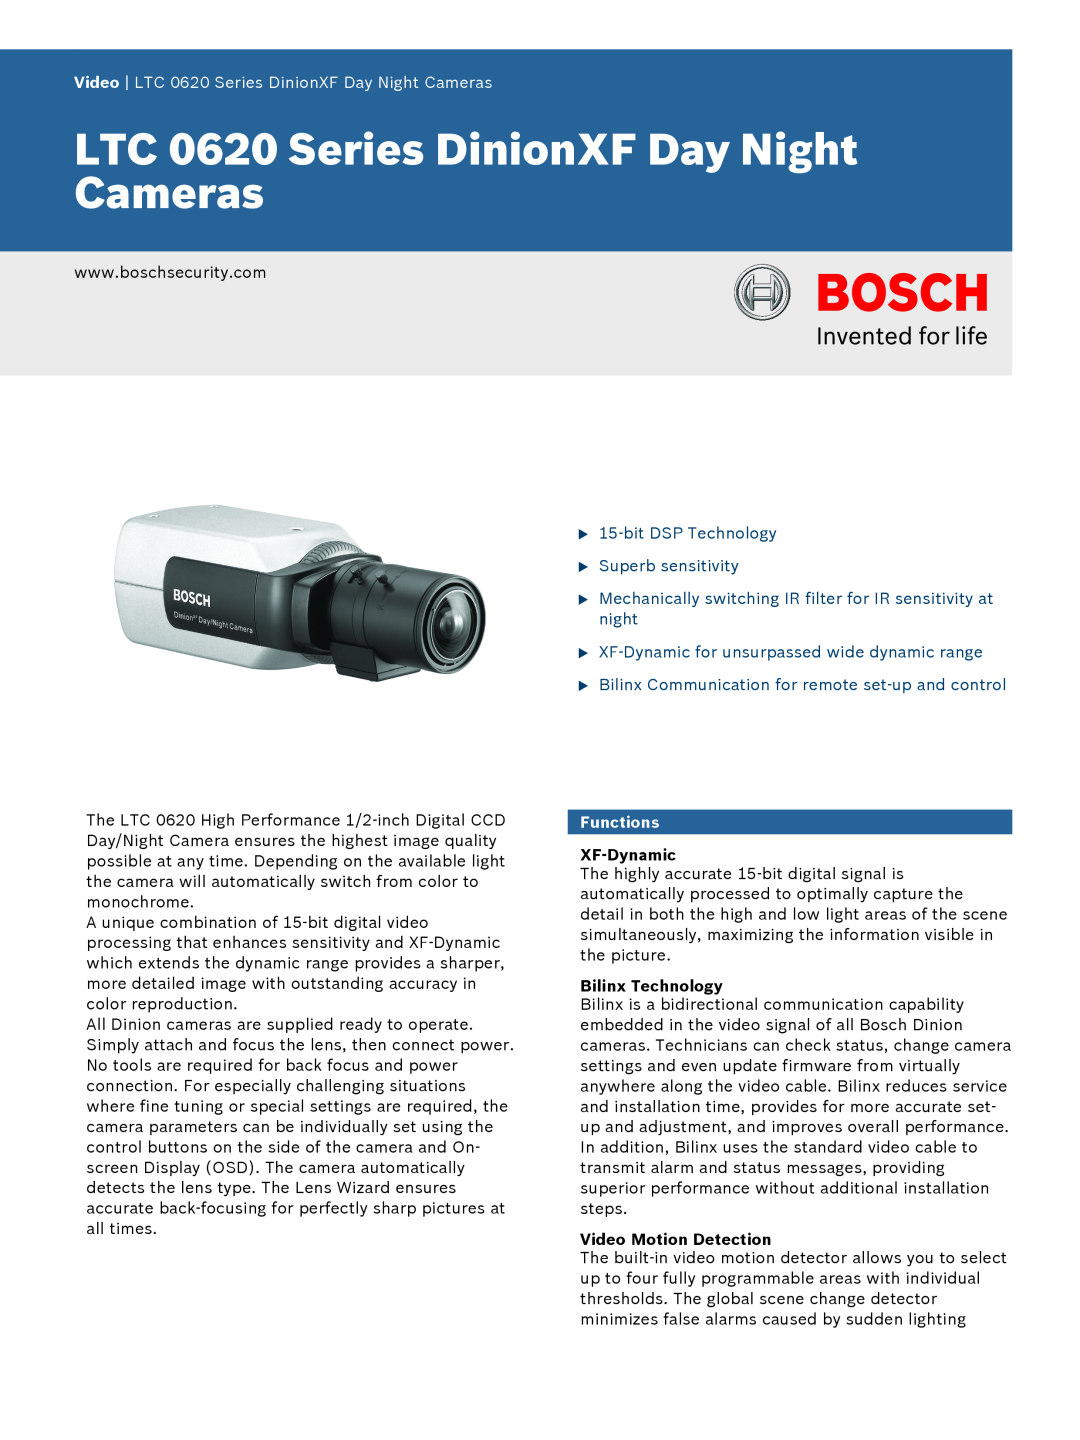 Bosch Appliances LTC 0620 manual Functions, XF-Dynamic, Bilinx Technology, Video Motion Detection 